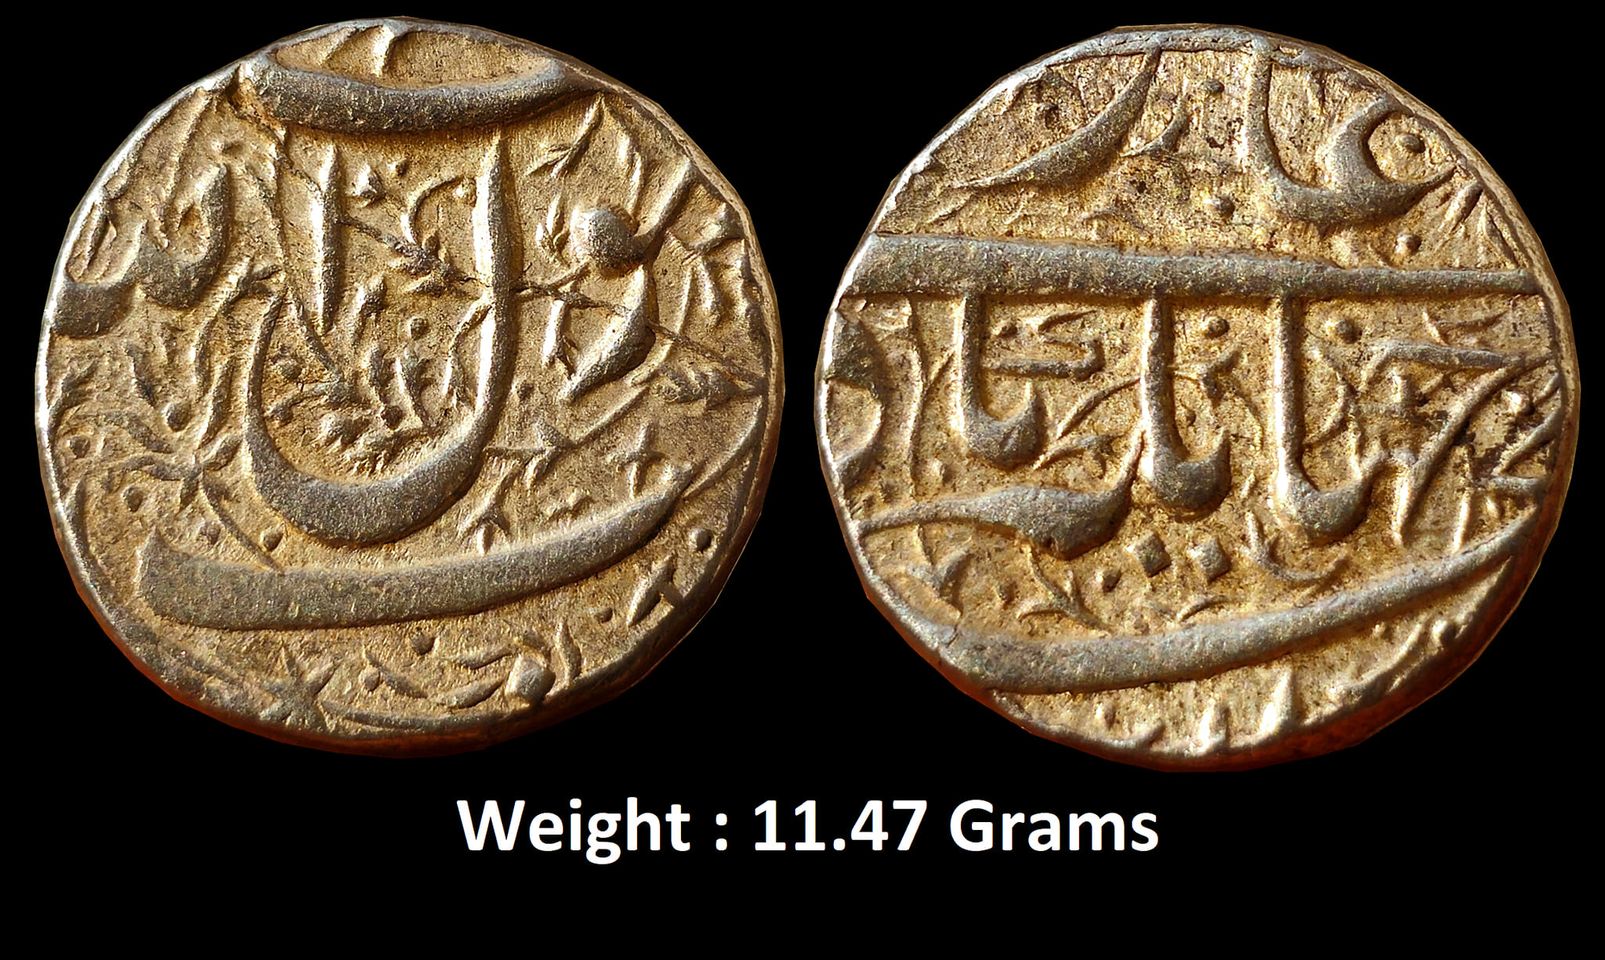 Mughal ; Jahangir, Ornamental ; Silver Rupee ; Weight : 11.47 Grams
Mint : Probably Jalnapur, (KM # 141.6),
Obv: kalima shahada,Rev: jahangir badshah,
Note : Flower pattern design on both side making the coin beautiful.